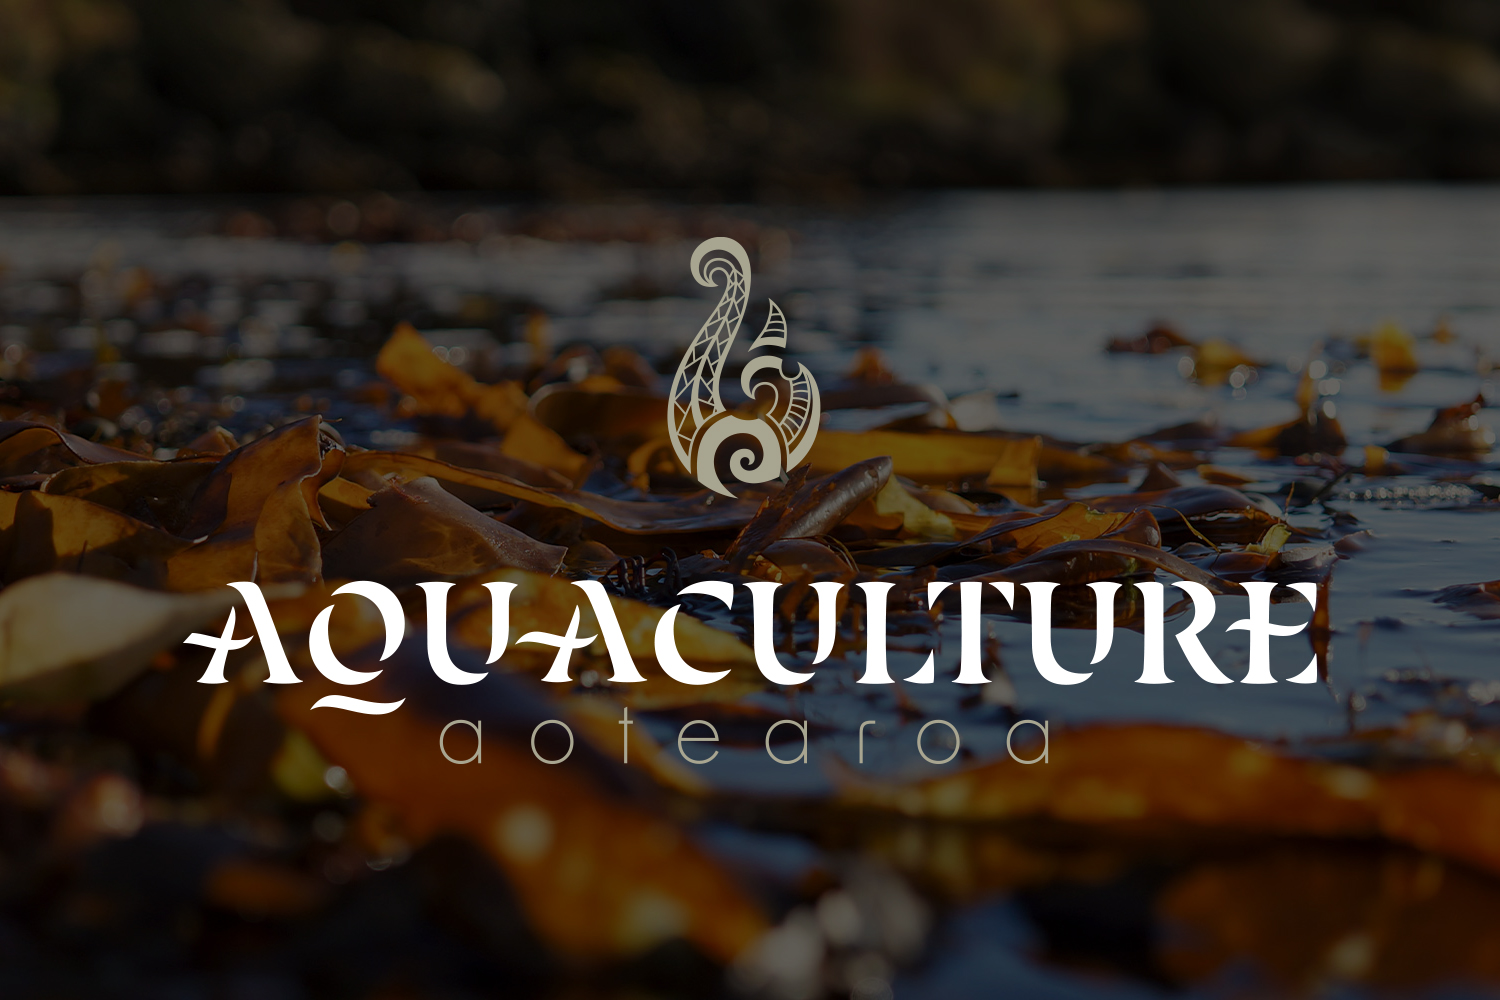 aquaculture aotearoa logo design, Ashleigh May Design